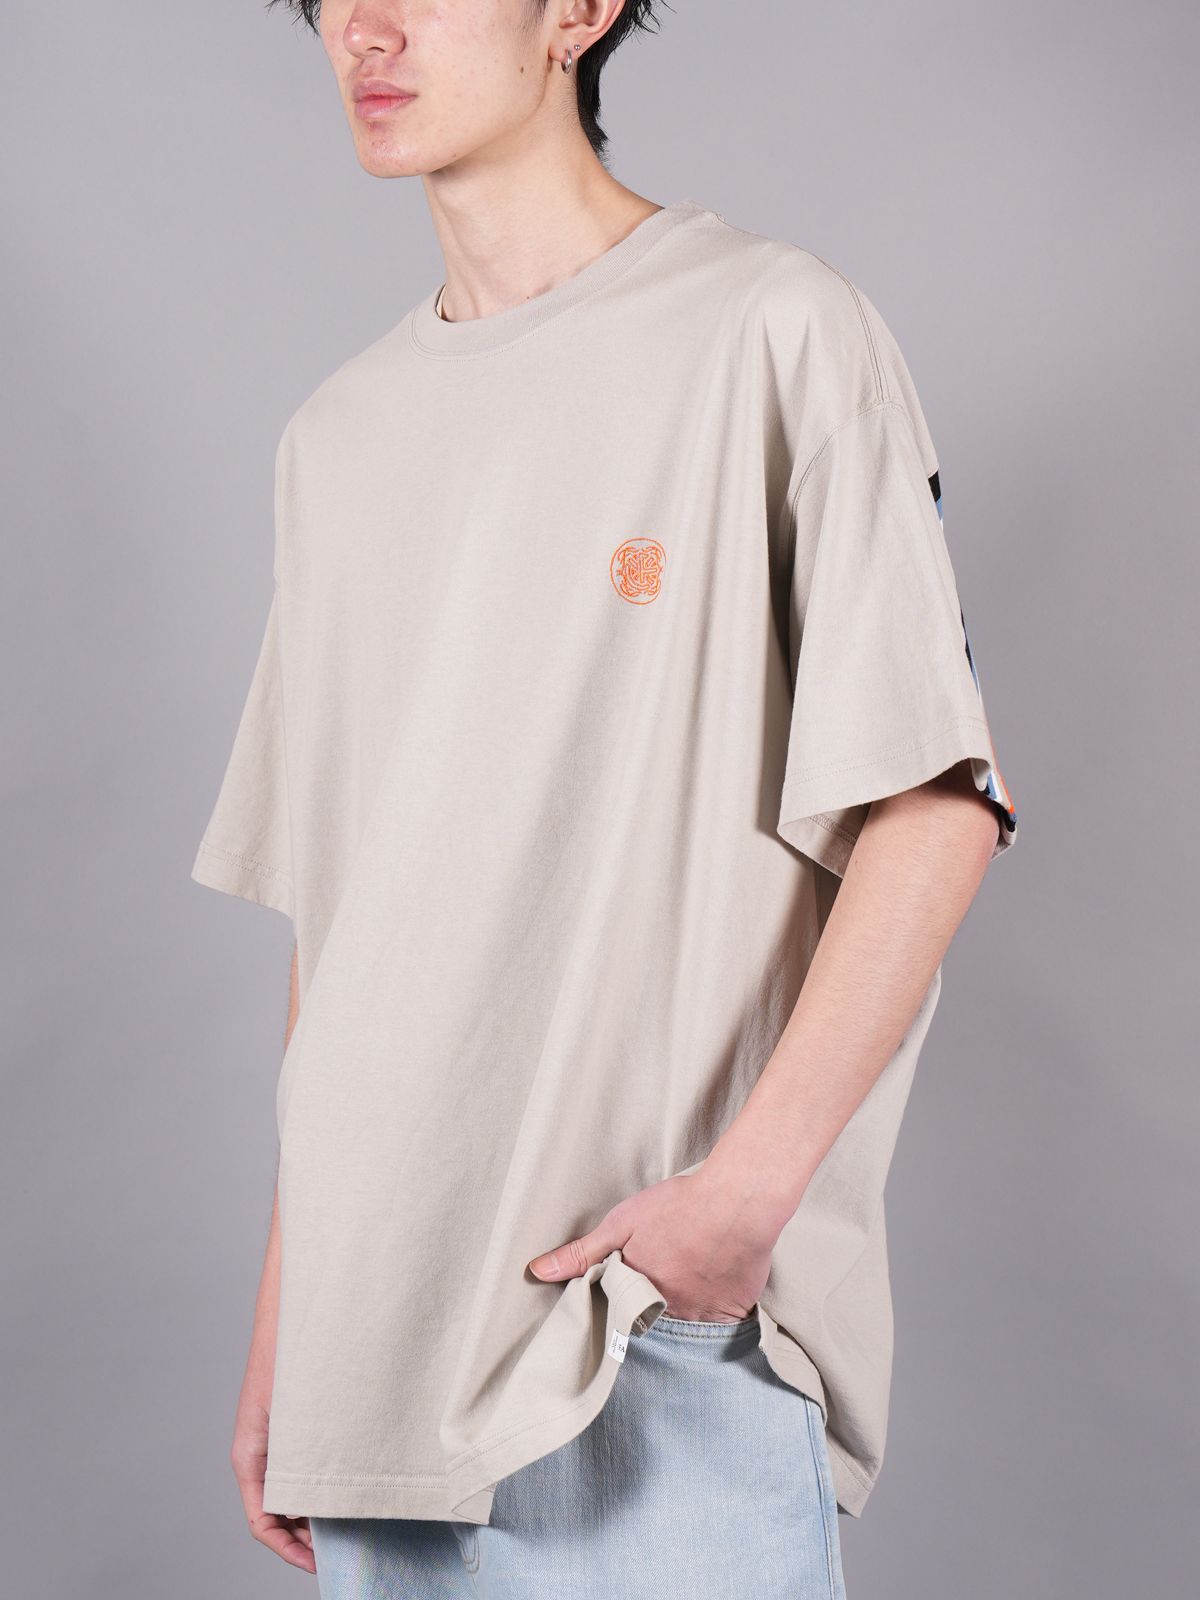 FACETASM Rib Big T-Shirt - Tシャツ/カットソー(半袖/袖なし)